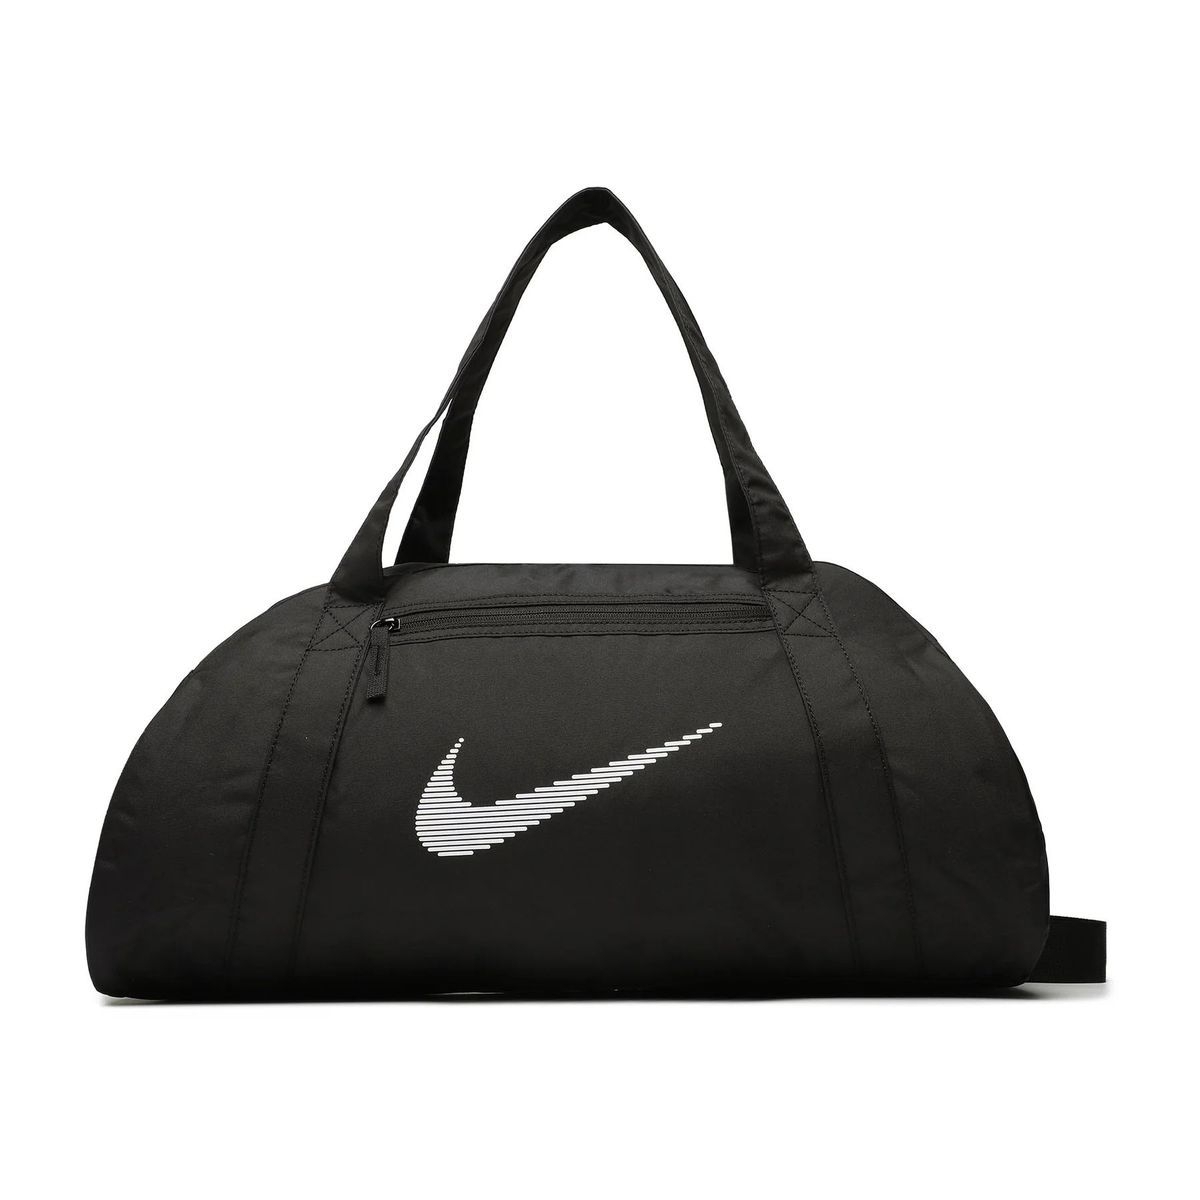 Nike sac de voyage black femme